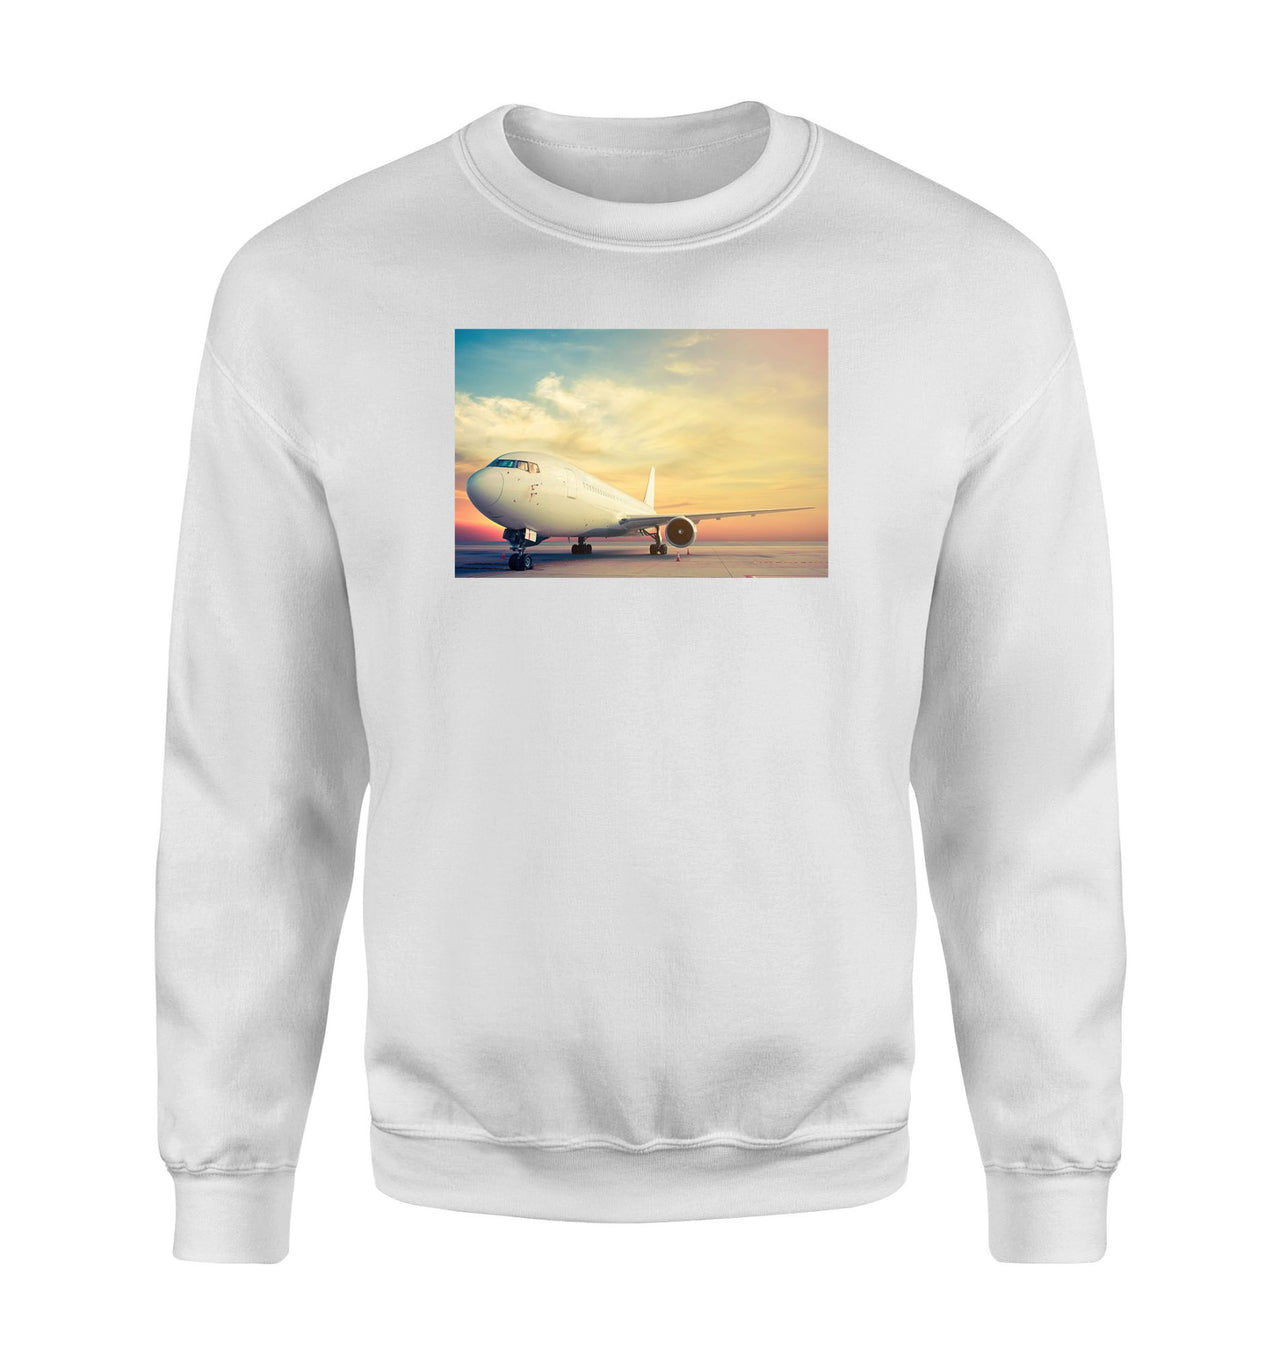 Parked Aircraft During Sunset Designed Sweatshirts